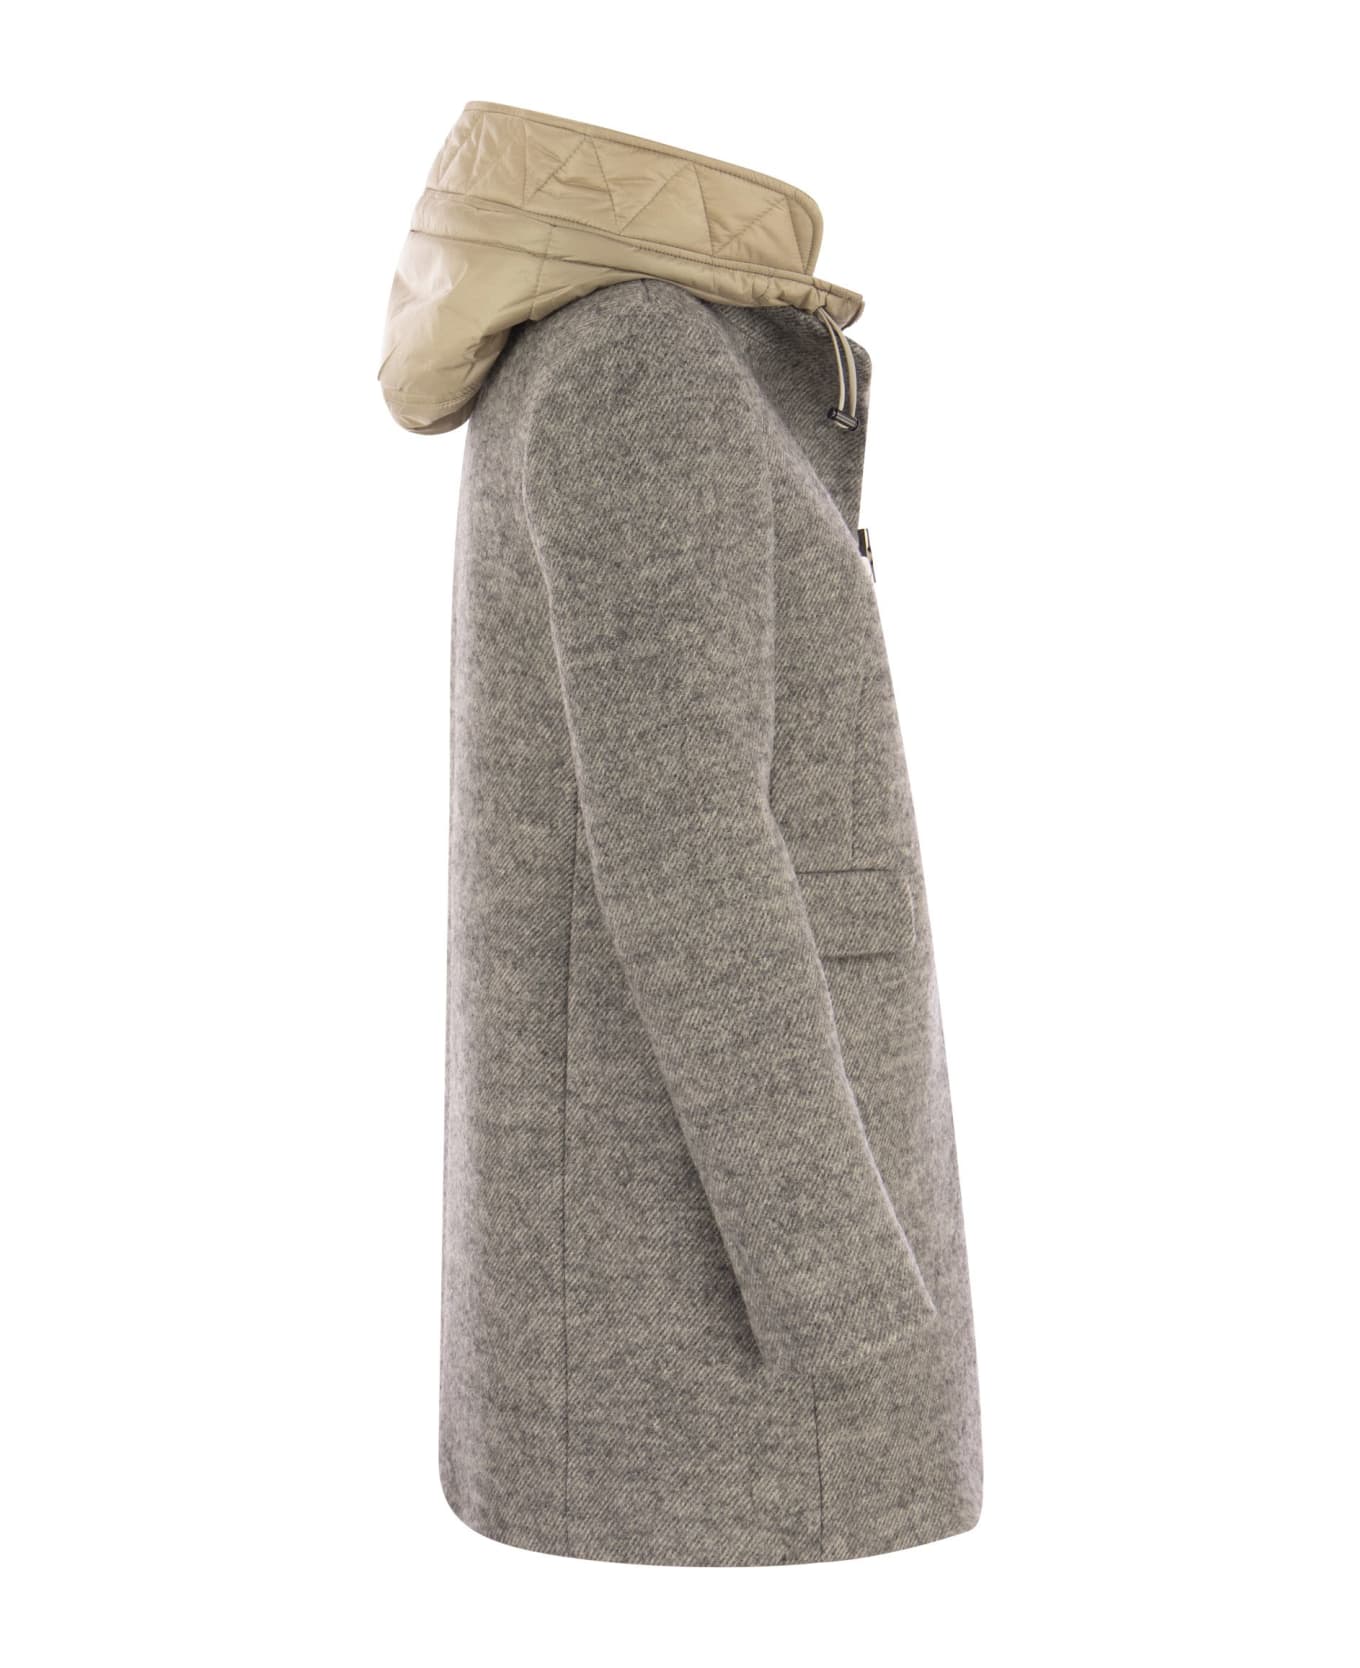 Fay Toggle - Wool-blend Coat With Hood - Melange Grey コート